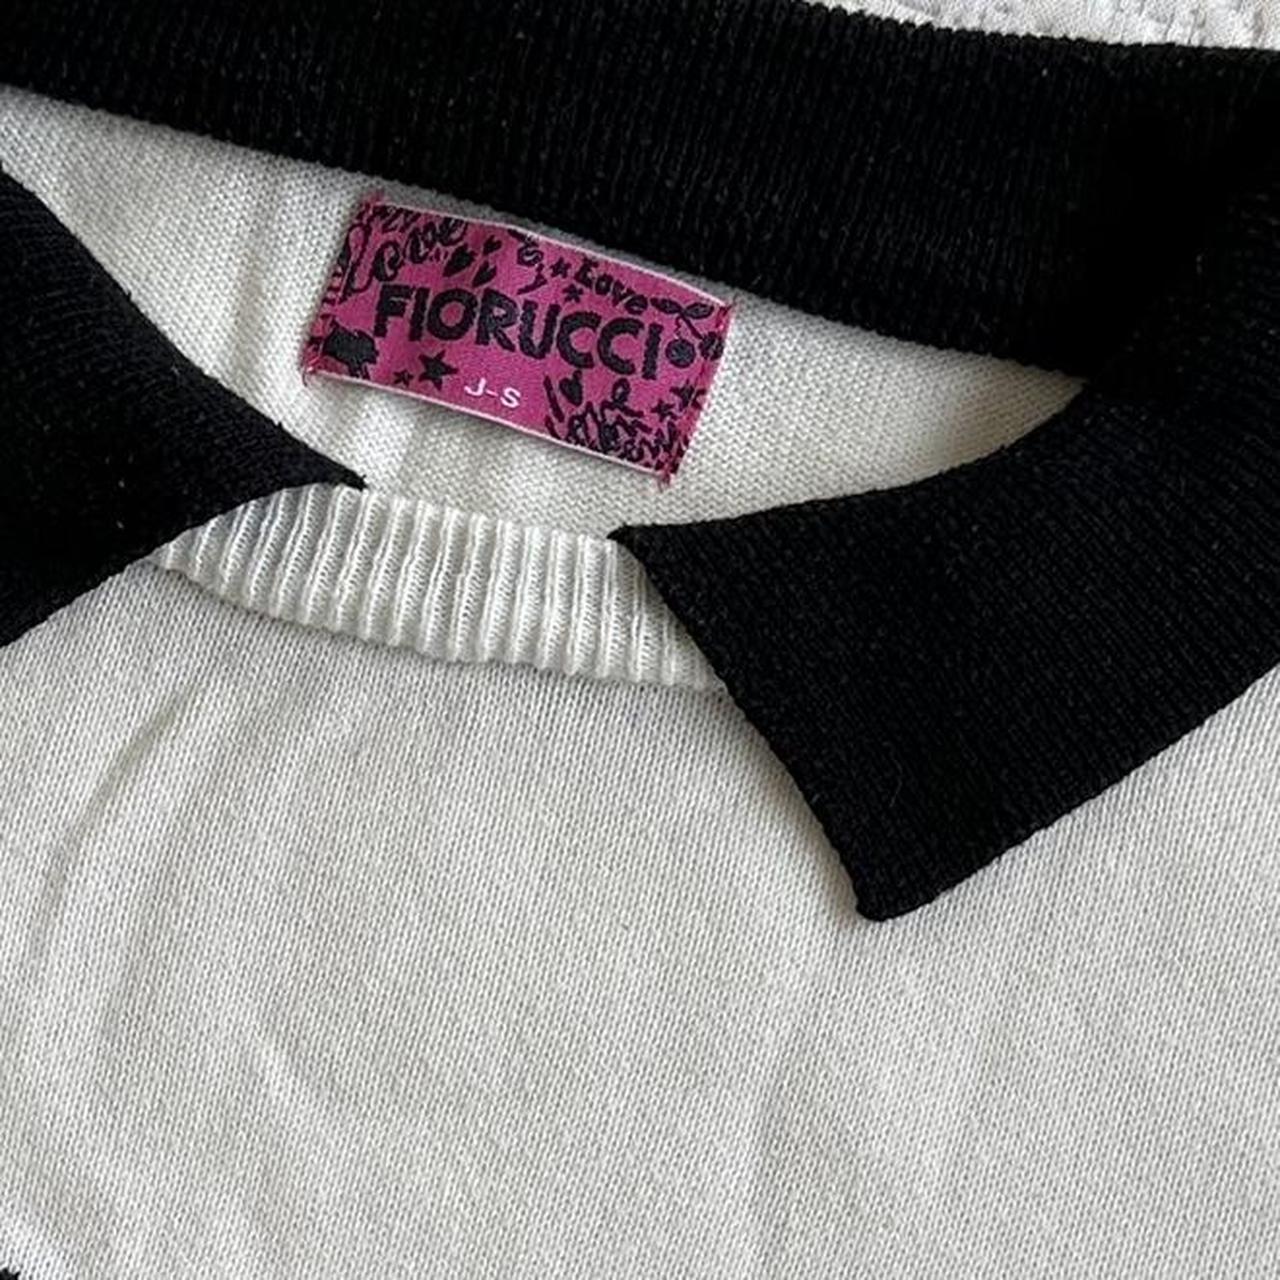 Fiorucci Women's White and Black Sweatshirt (3)